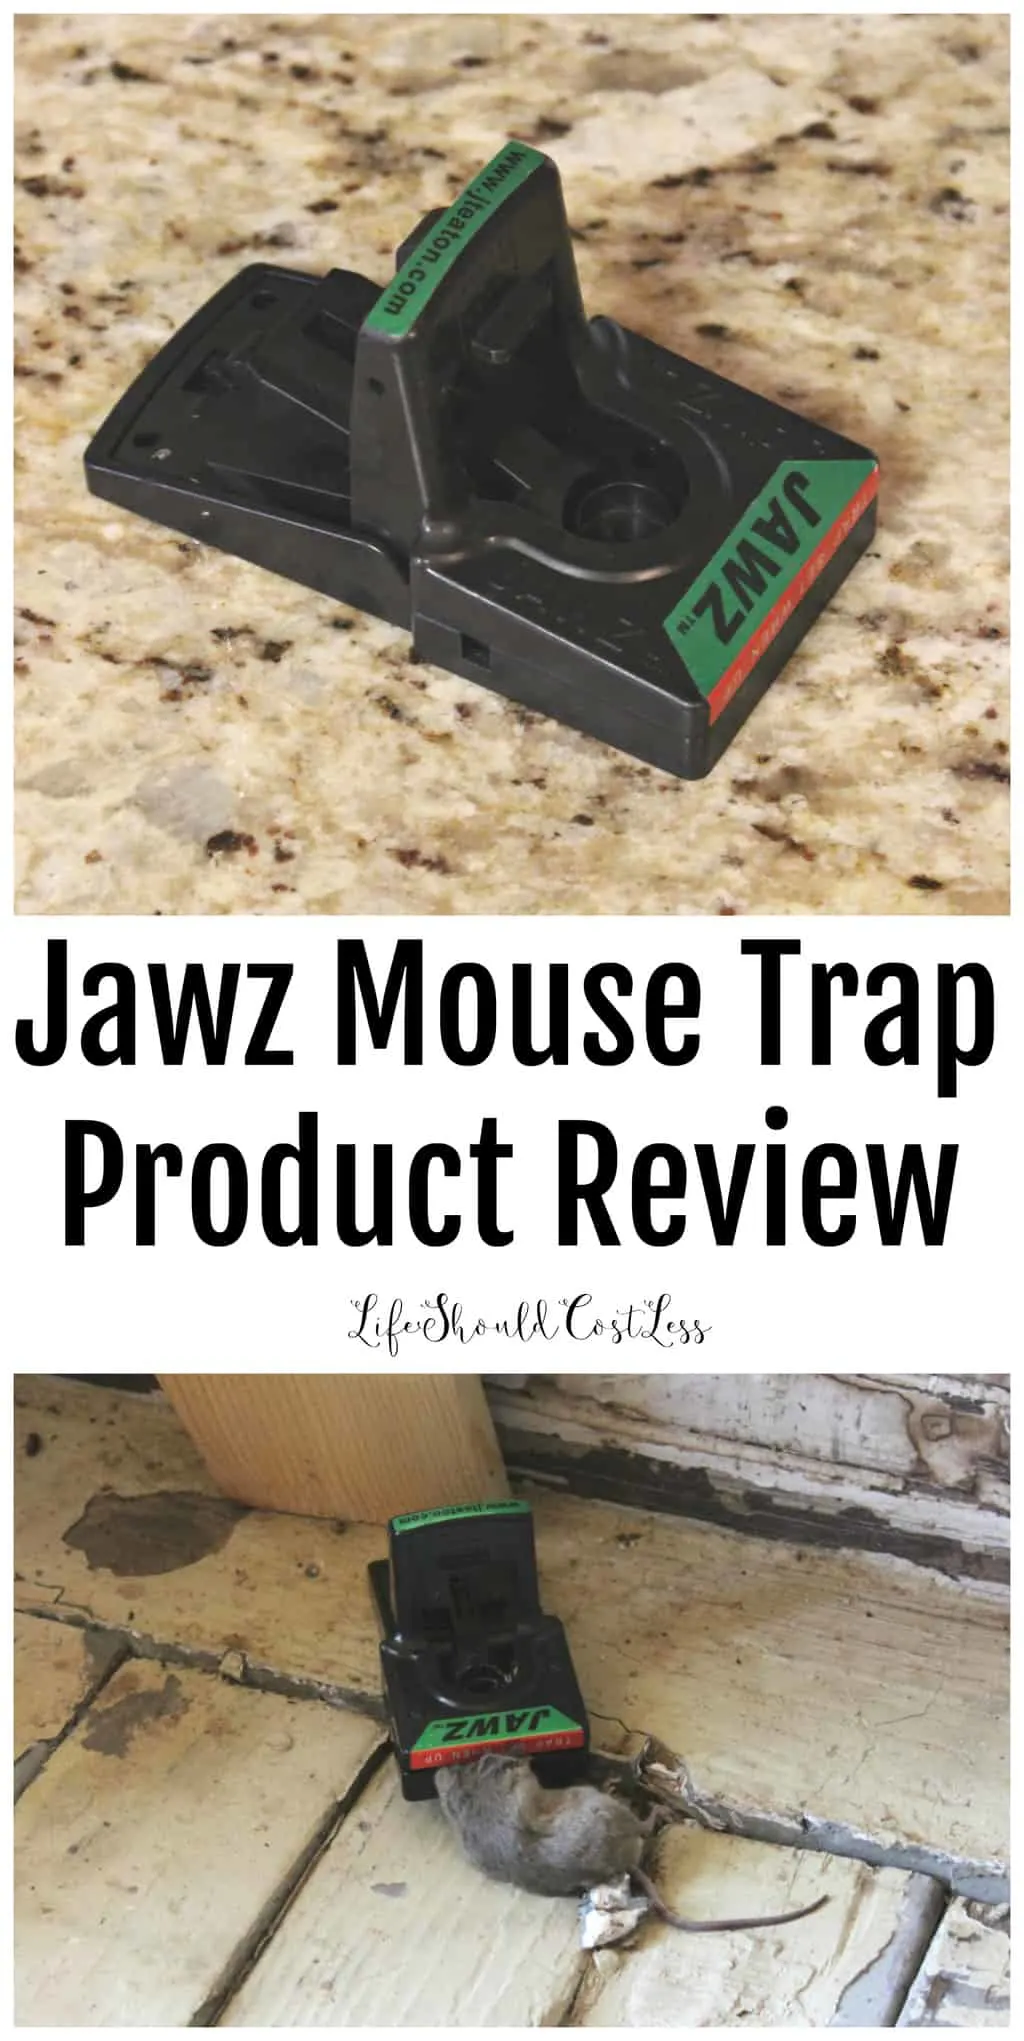 https://lifeshouldcostless.com/wp-content/uploads/2018/09/Jawzjaws-Mouse-Trap-Product-Review.-lifeshouldcostless.com_.jpg.webp